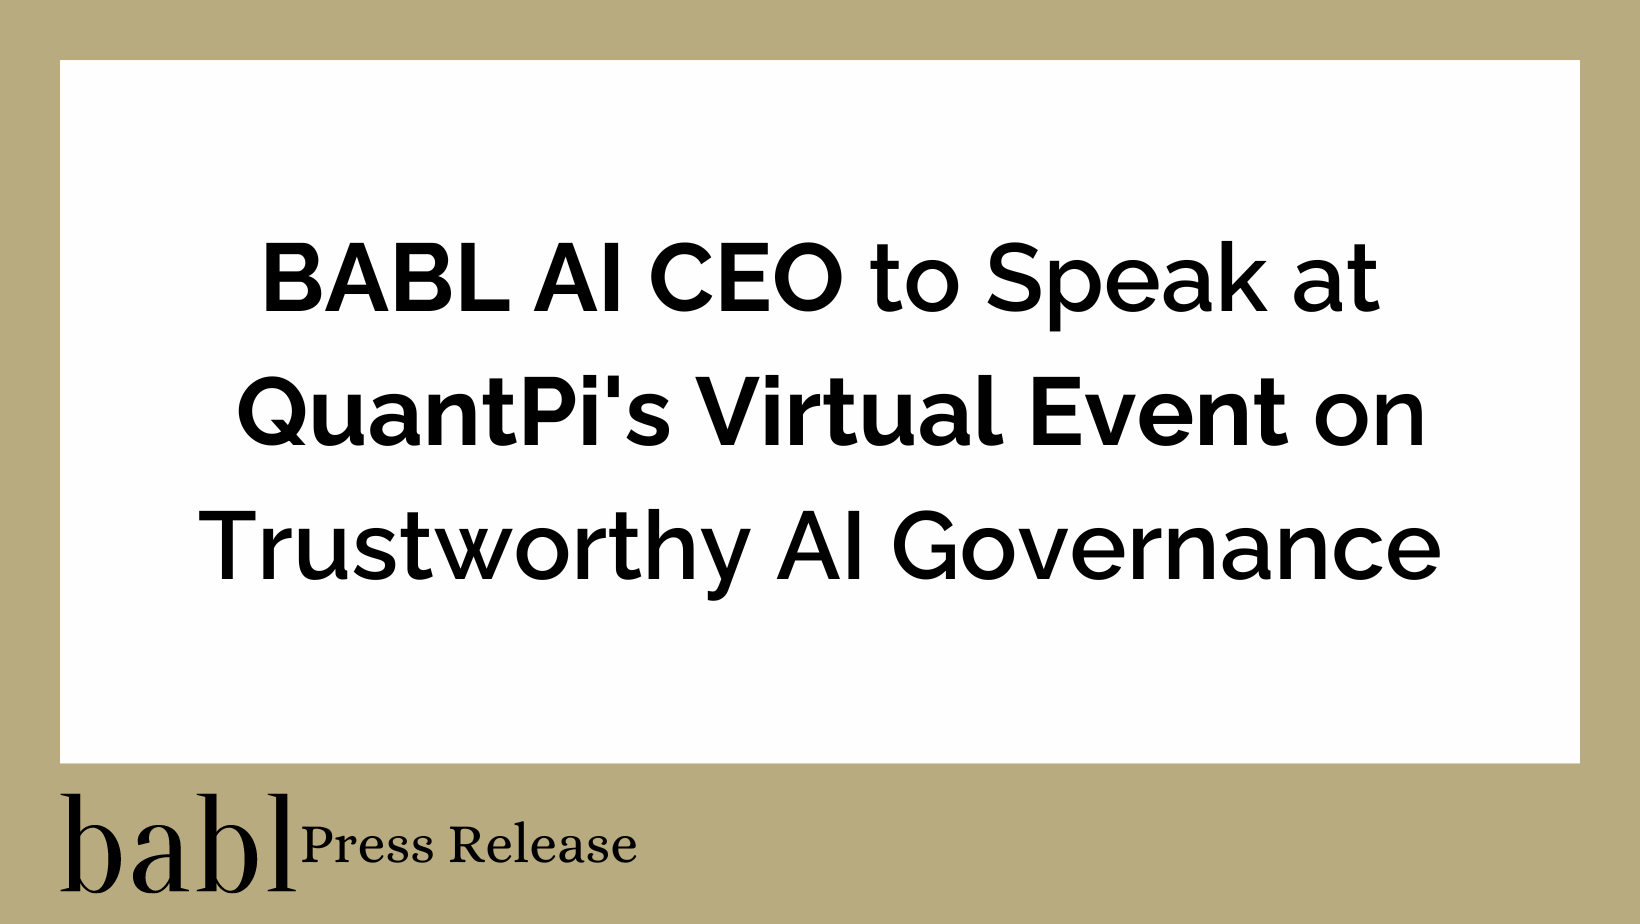 BABL AI CEO to Speak at QuantPi’s Virtual Event on Trustworthy AI Governance